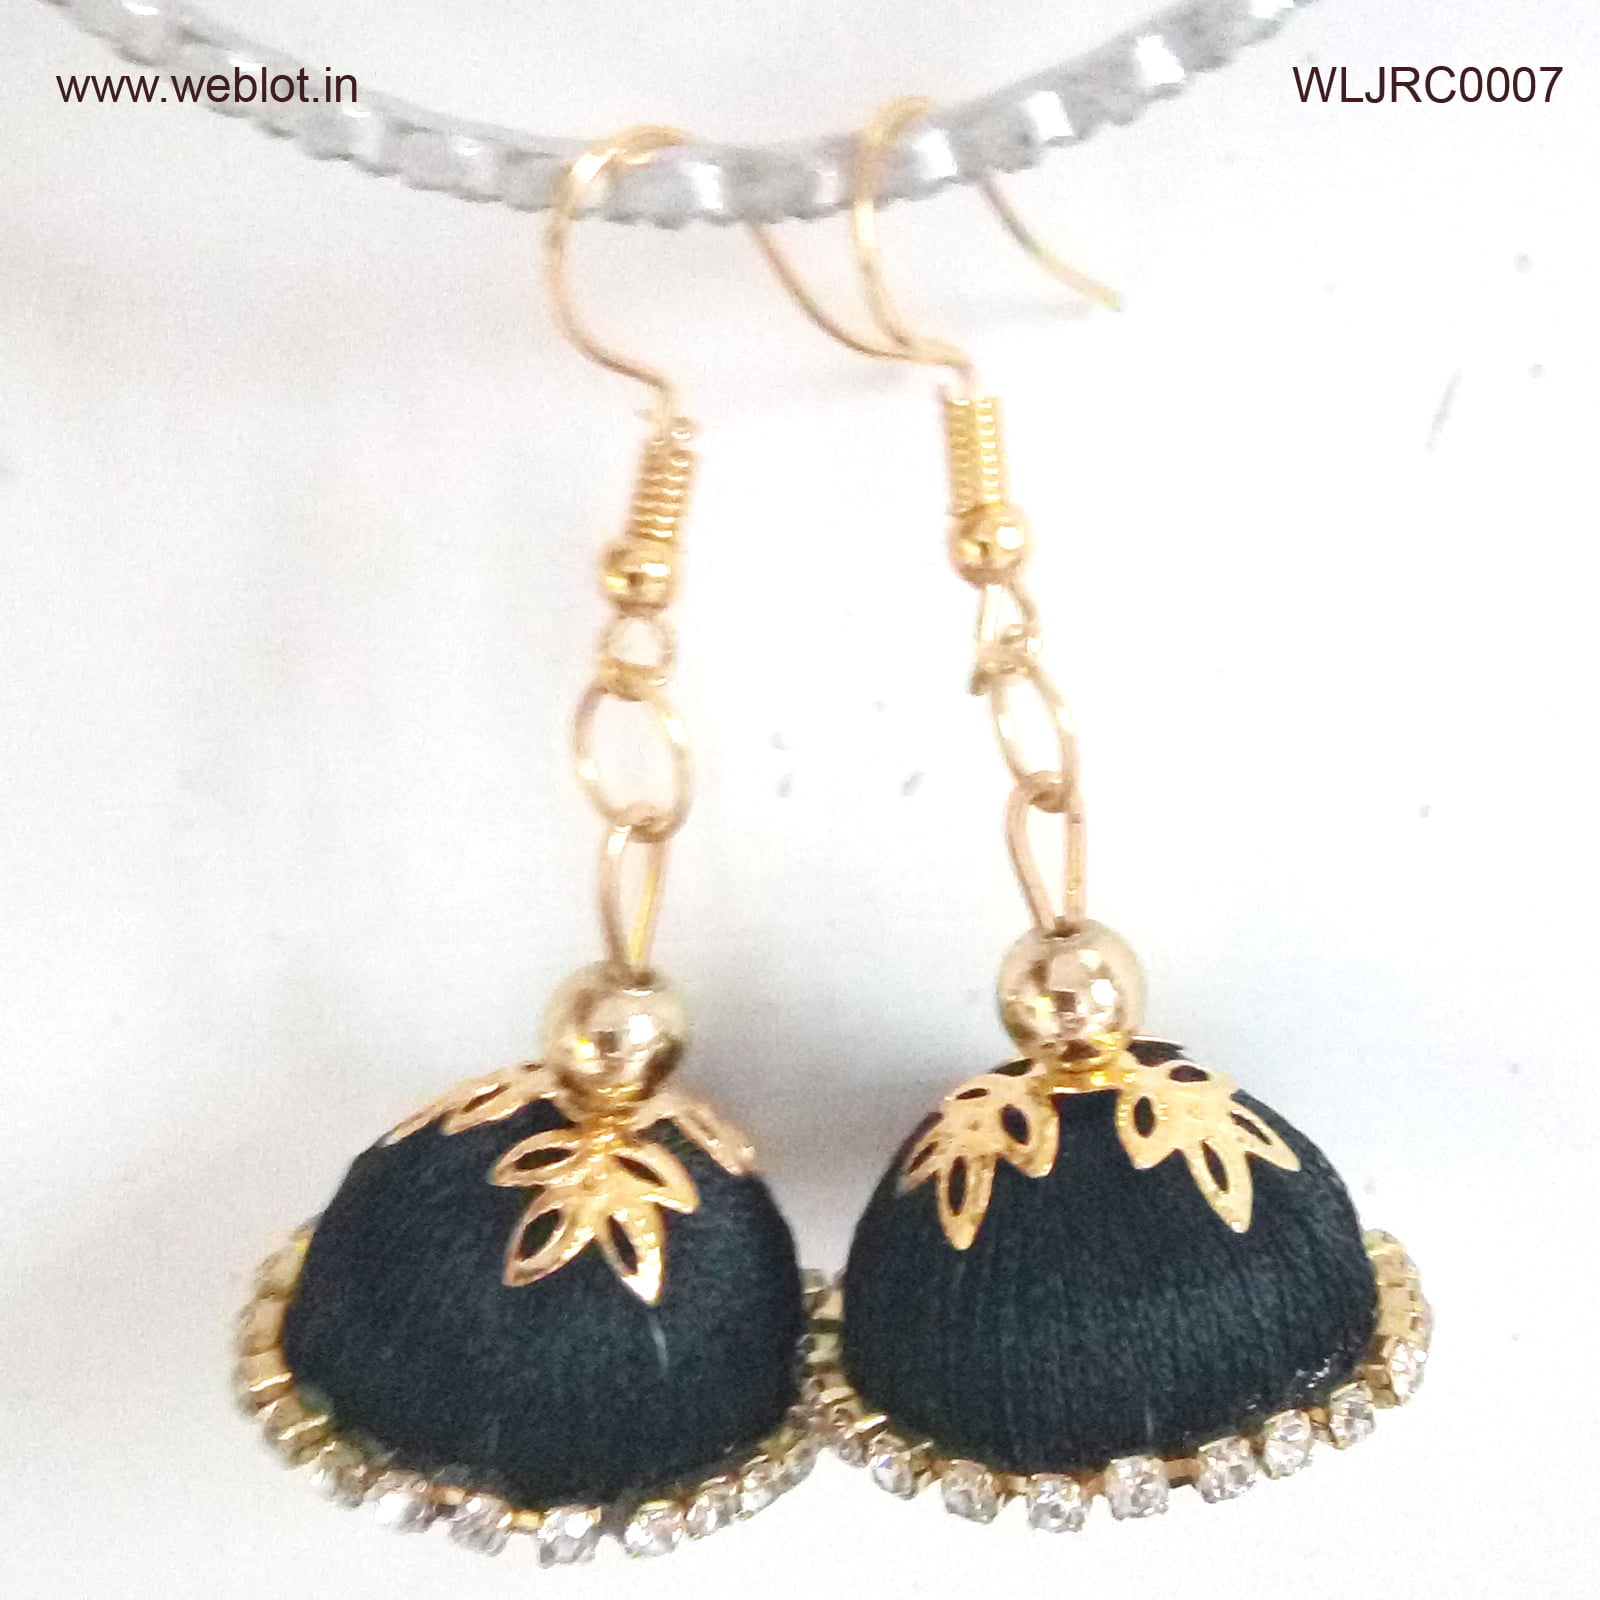 Handmade Black Earrings with Stone Work - Weblot